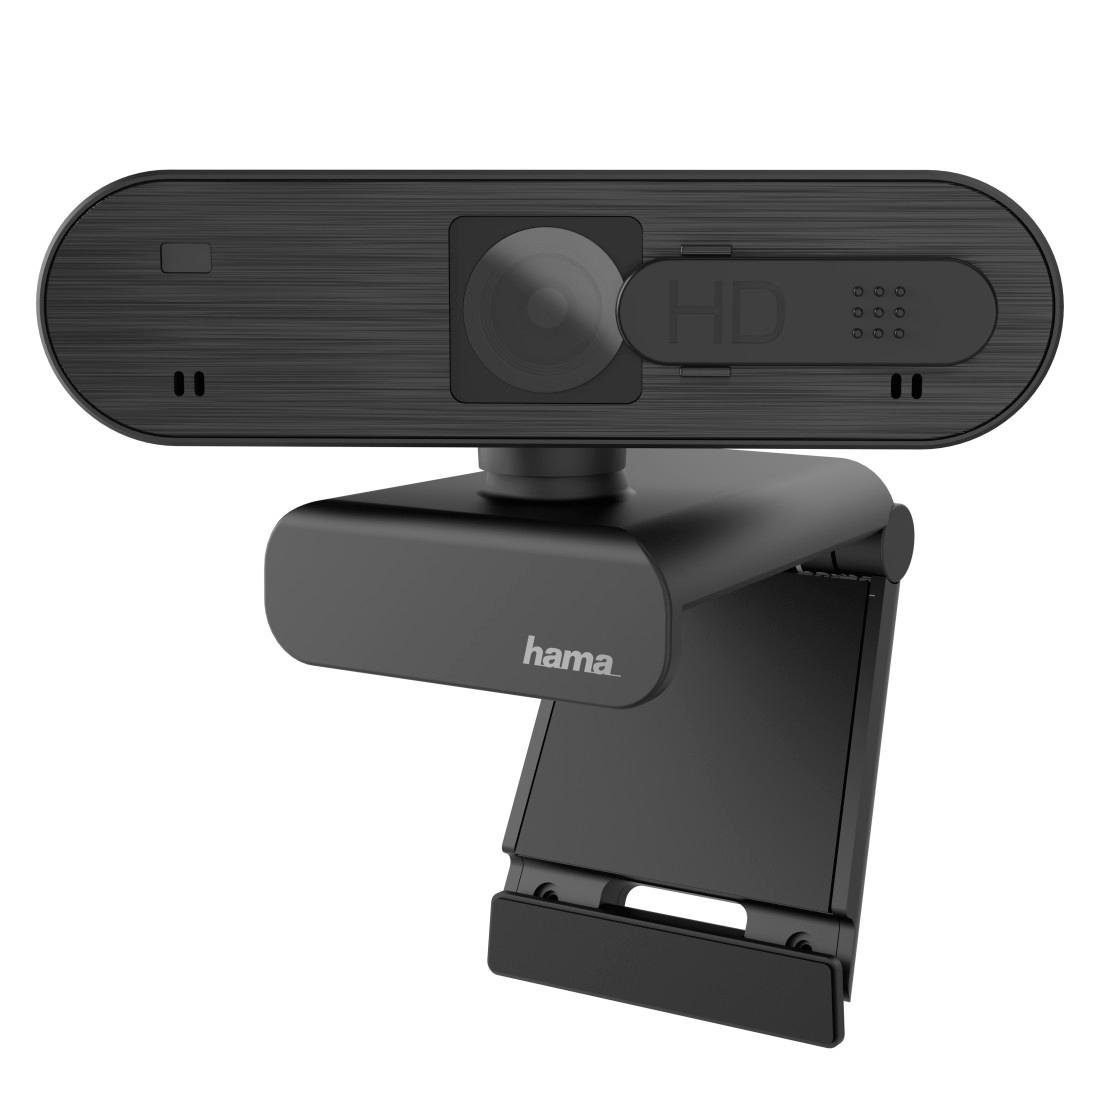 Hama PC-Webcam "C-600 Pro", Webcam Webcam 1080p Full-HD